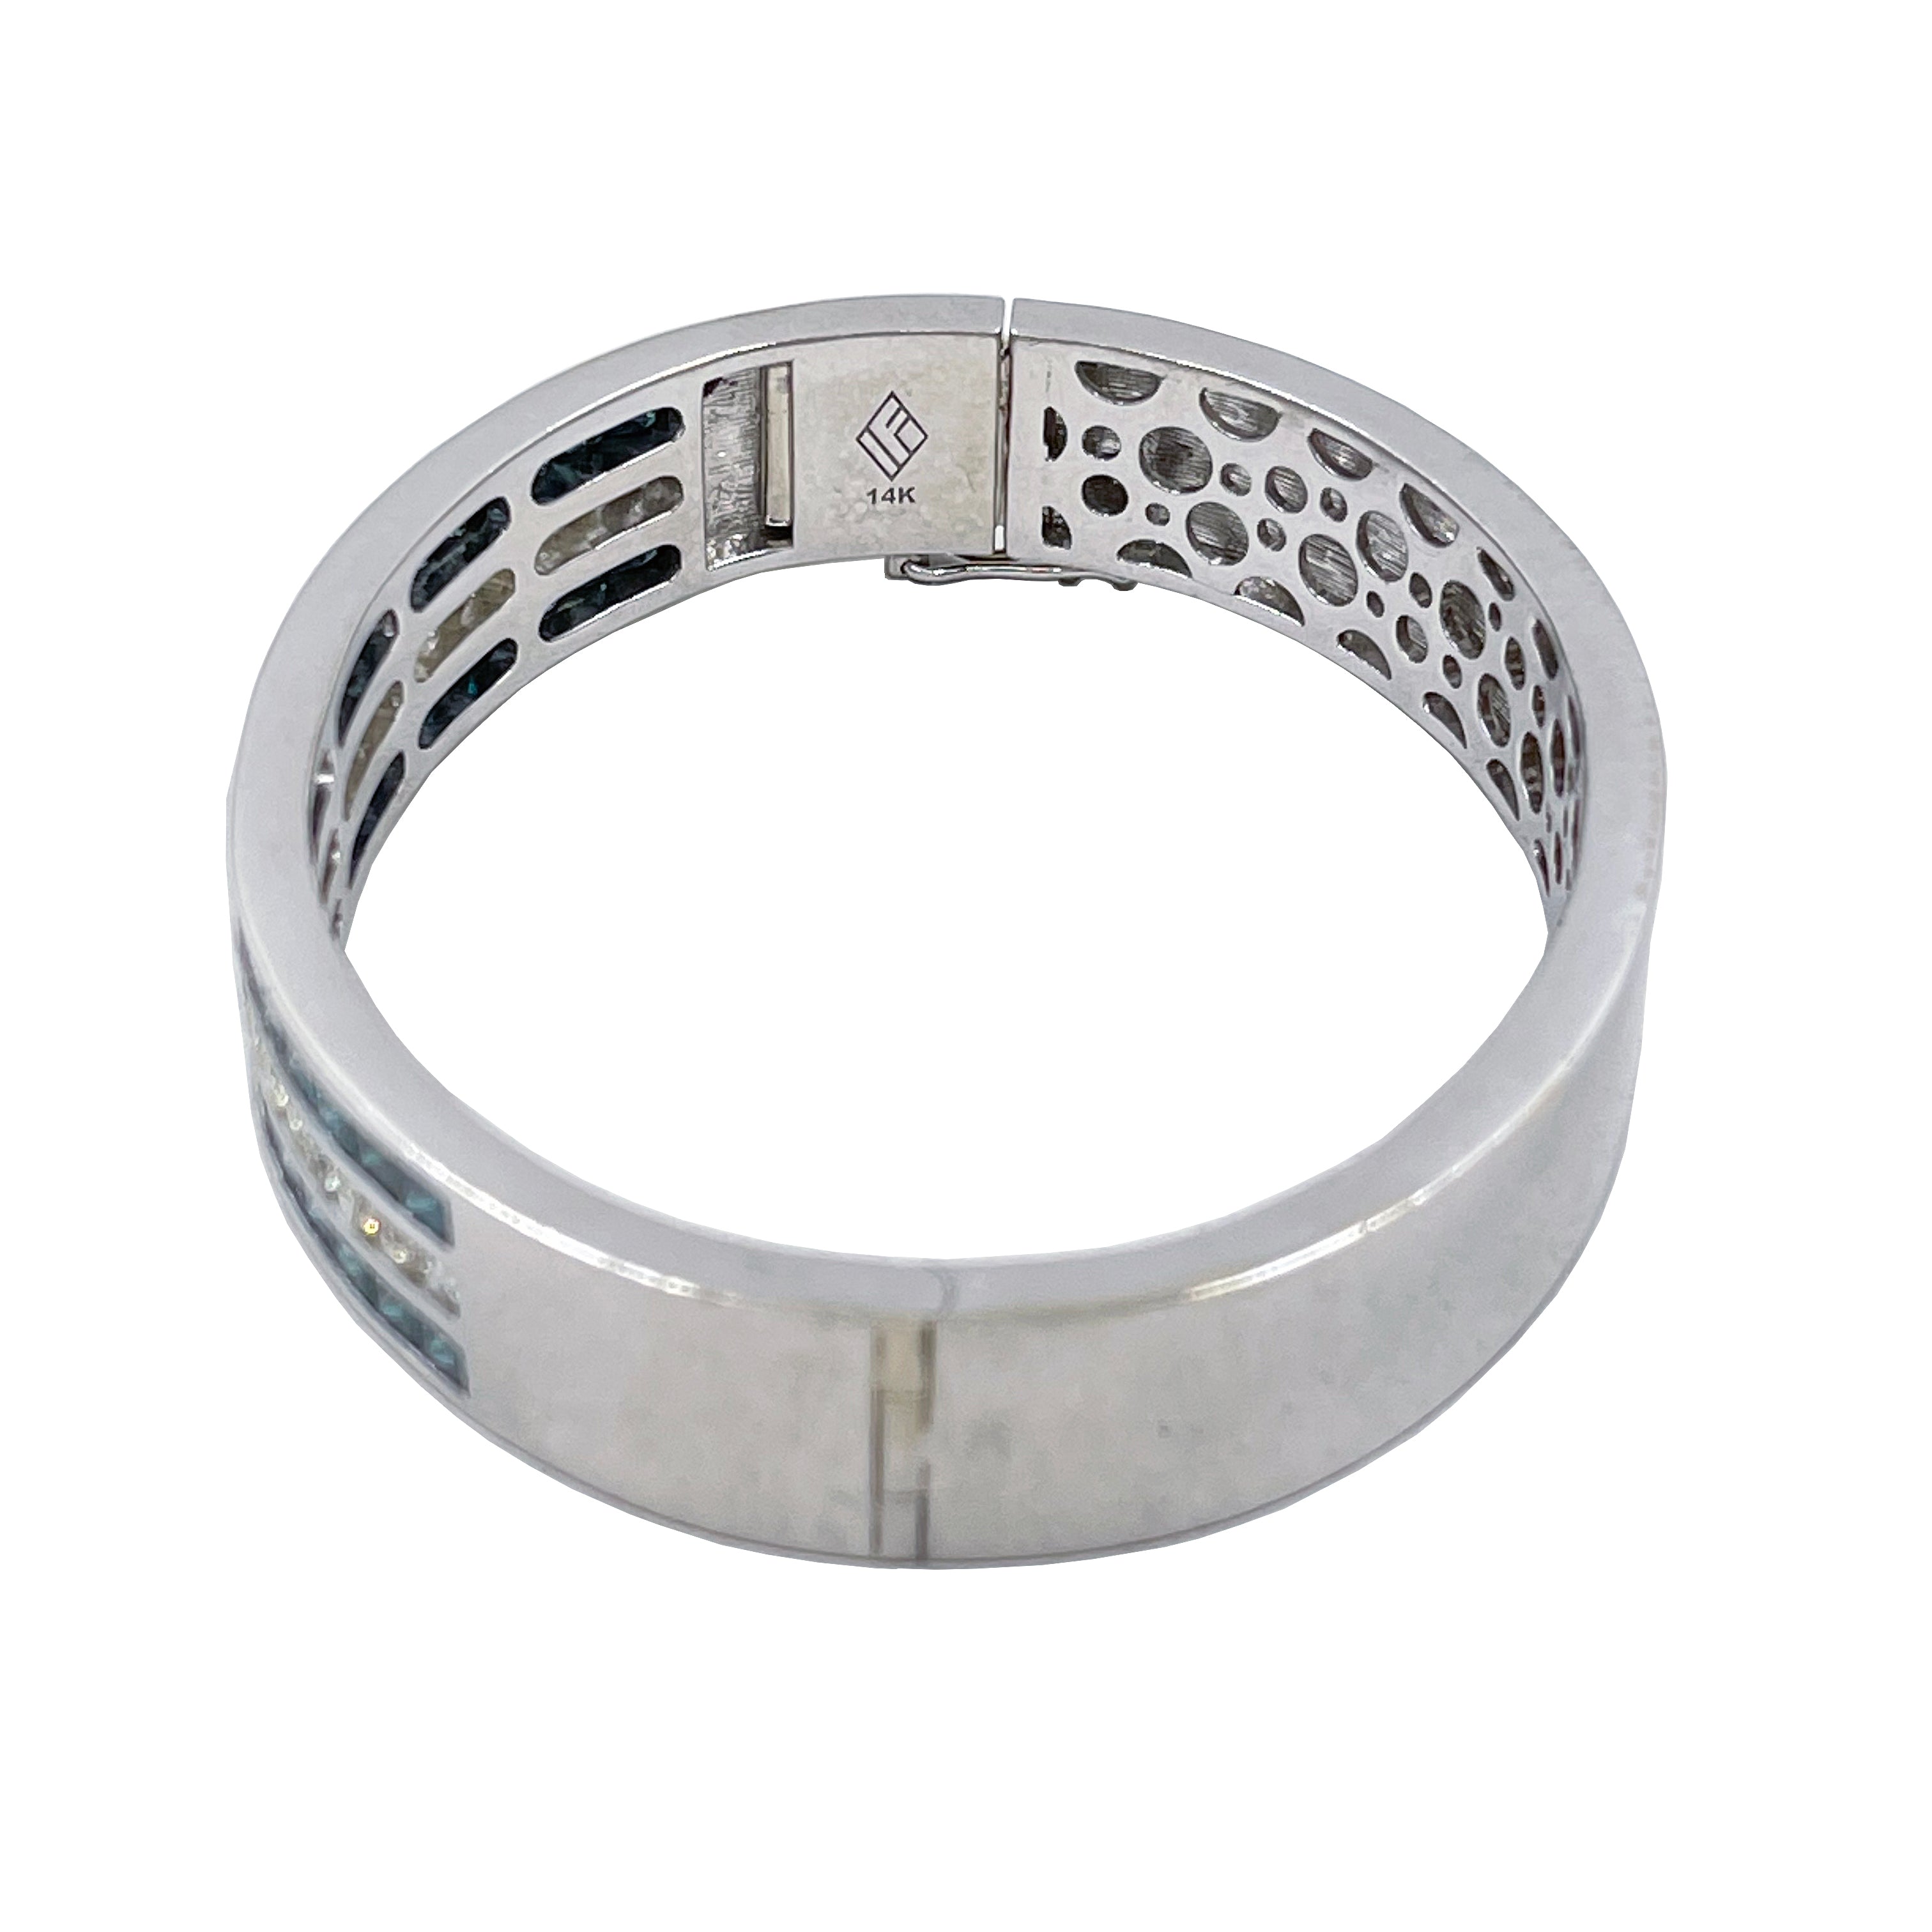 14K White Gold Bracelet with Diamond and Sapphire Set